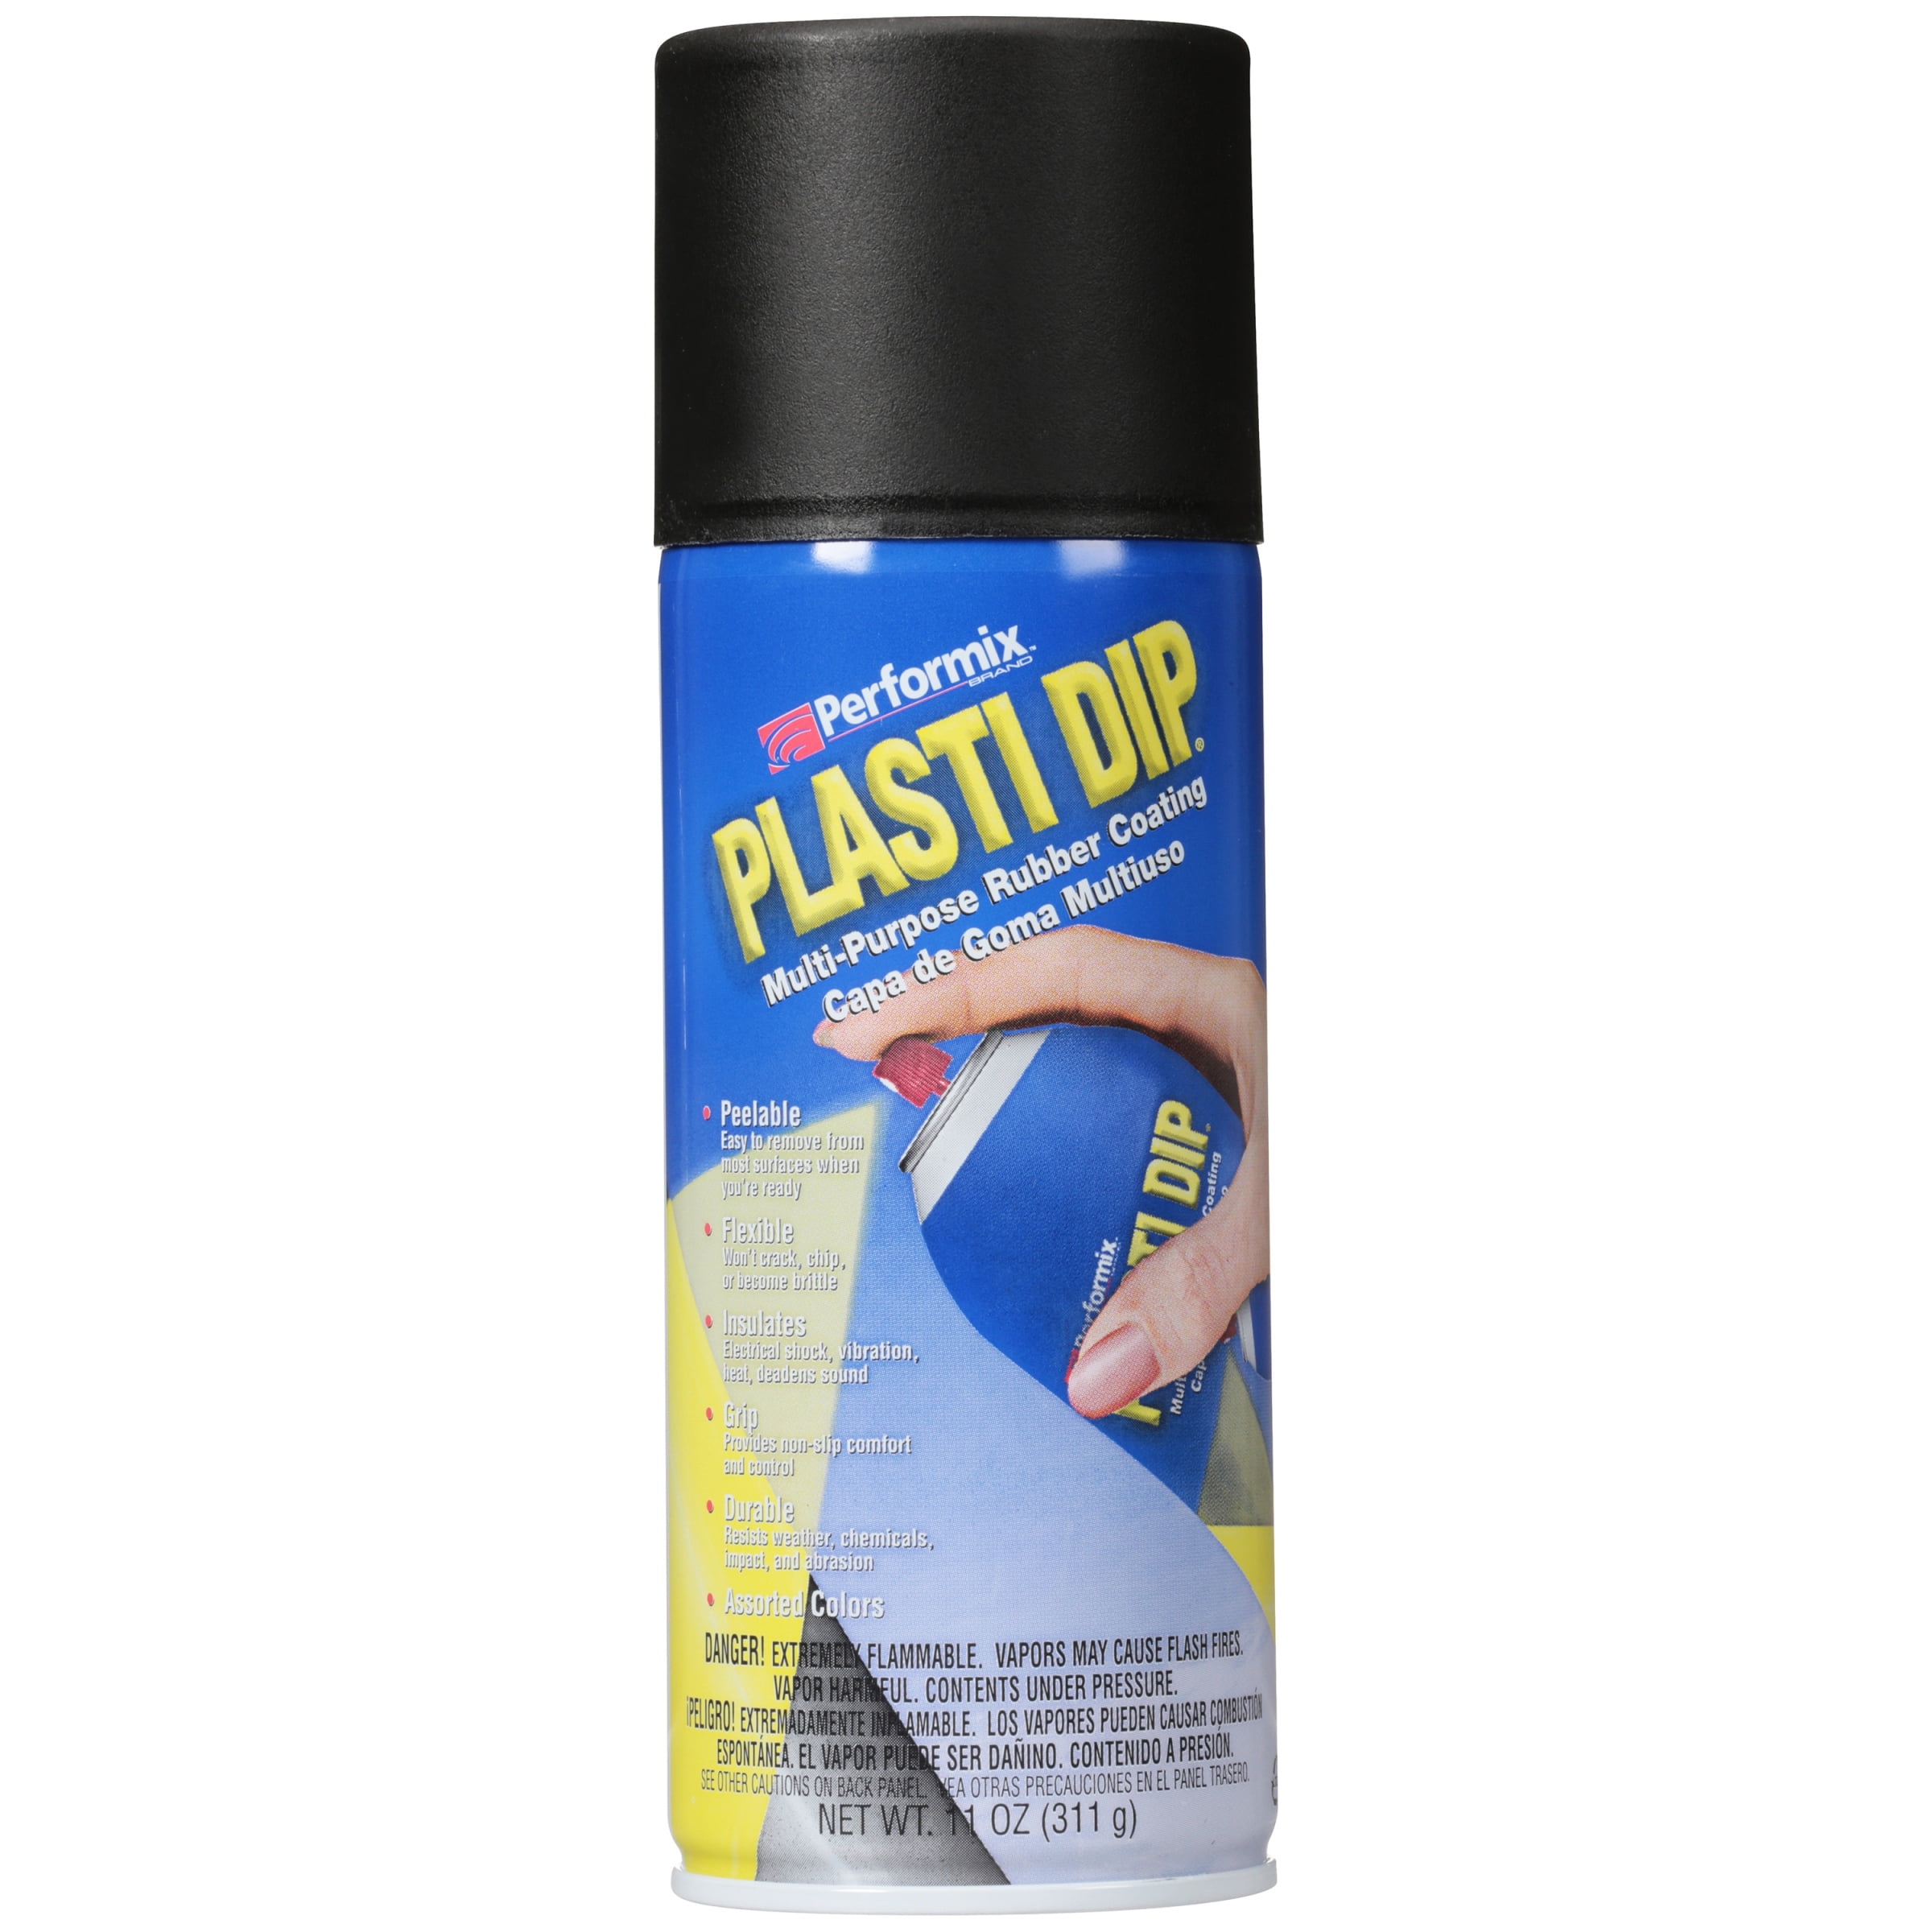 Plasti Dip Spray, Multi-Purpose Rubber Coating, Black 11oz